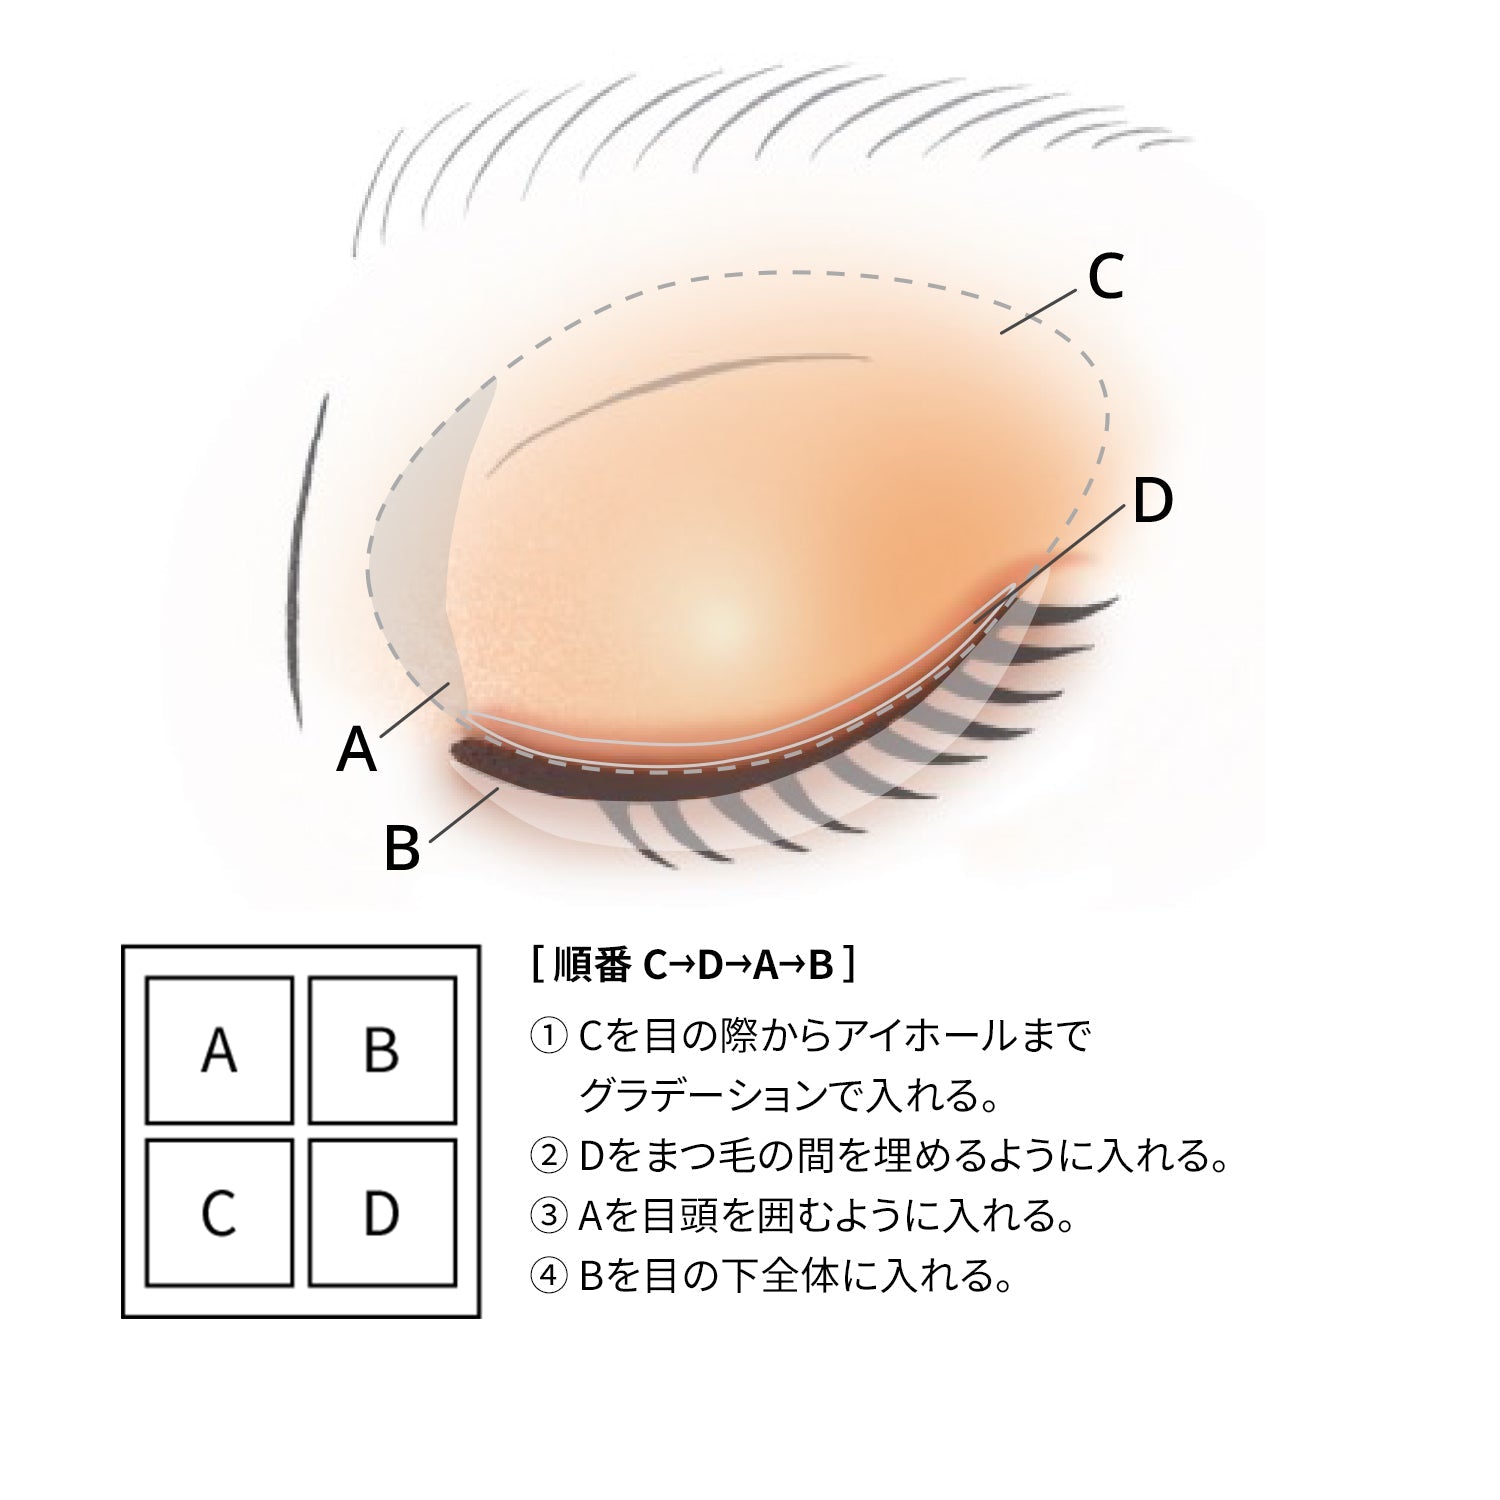 Suqqu Signature Color Eyes - Ichiban Mart